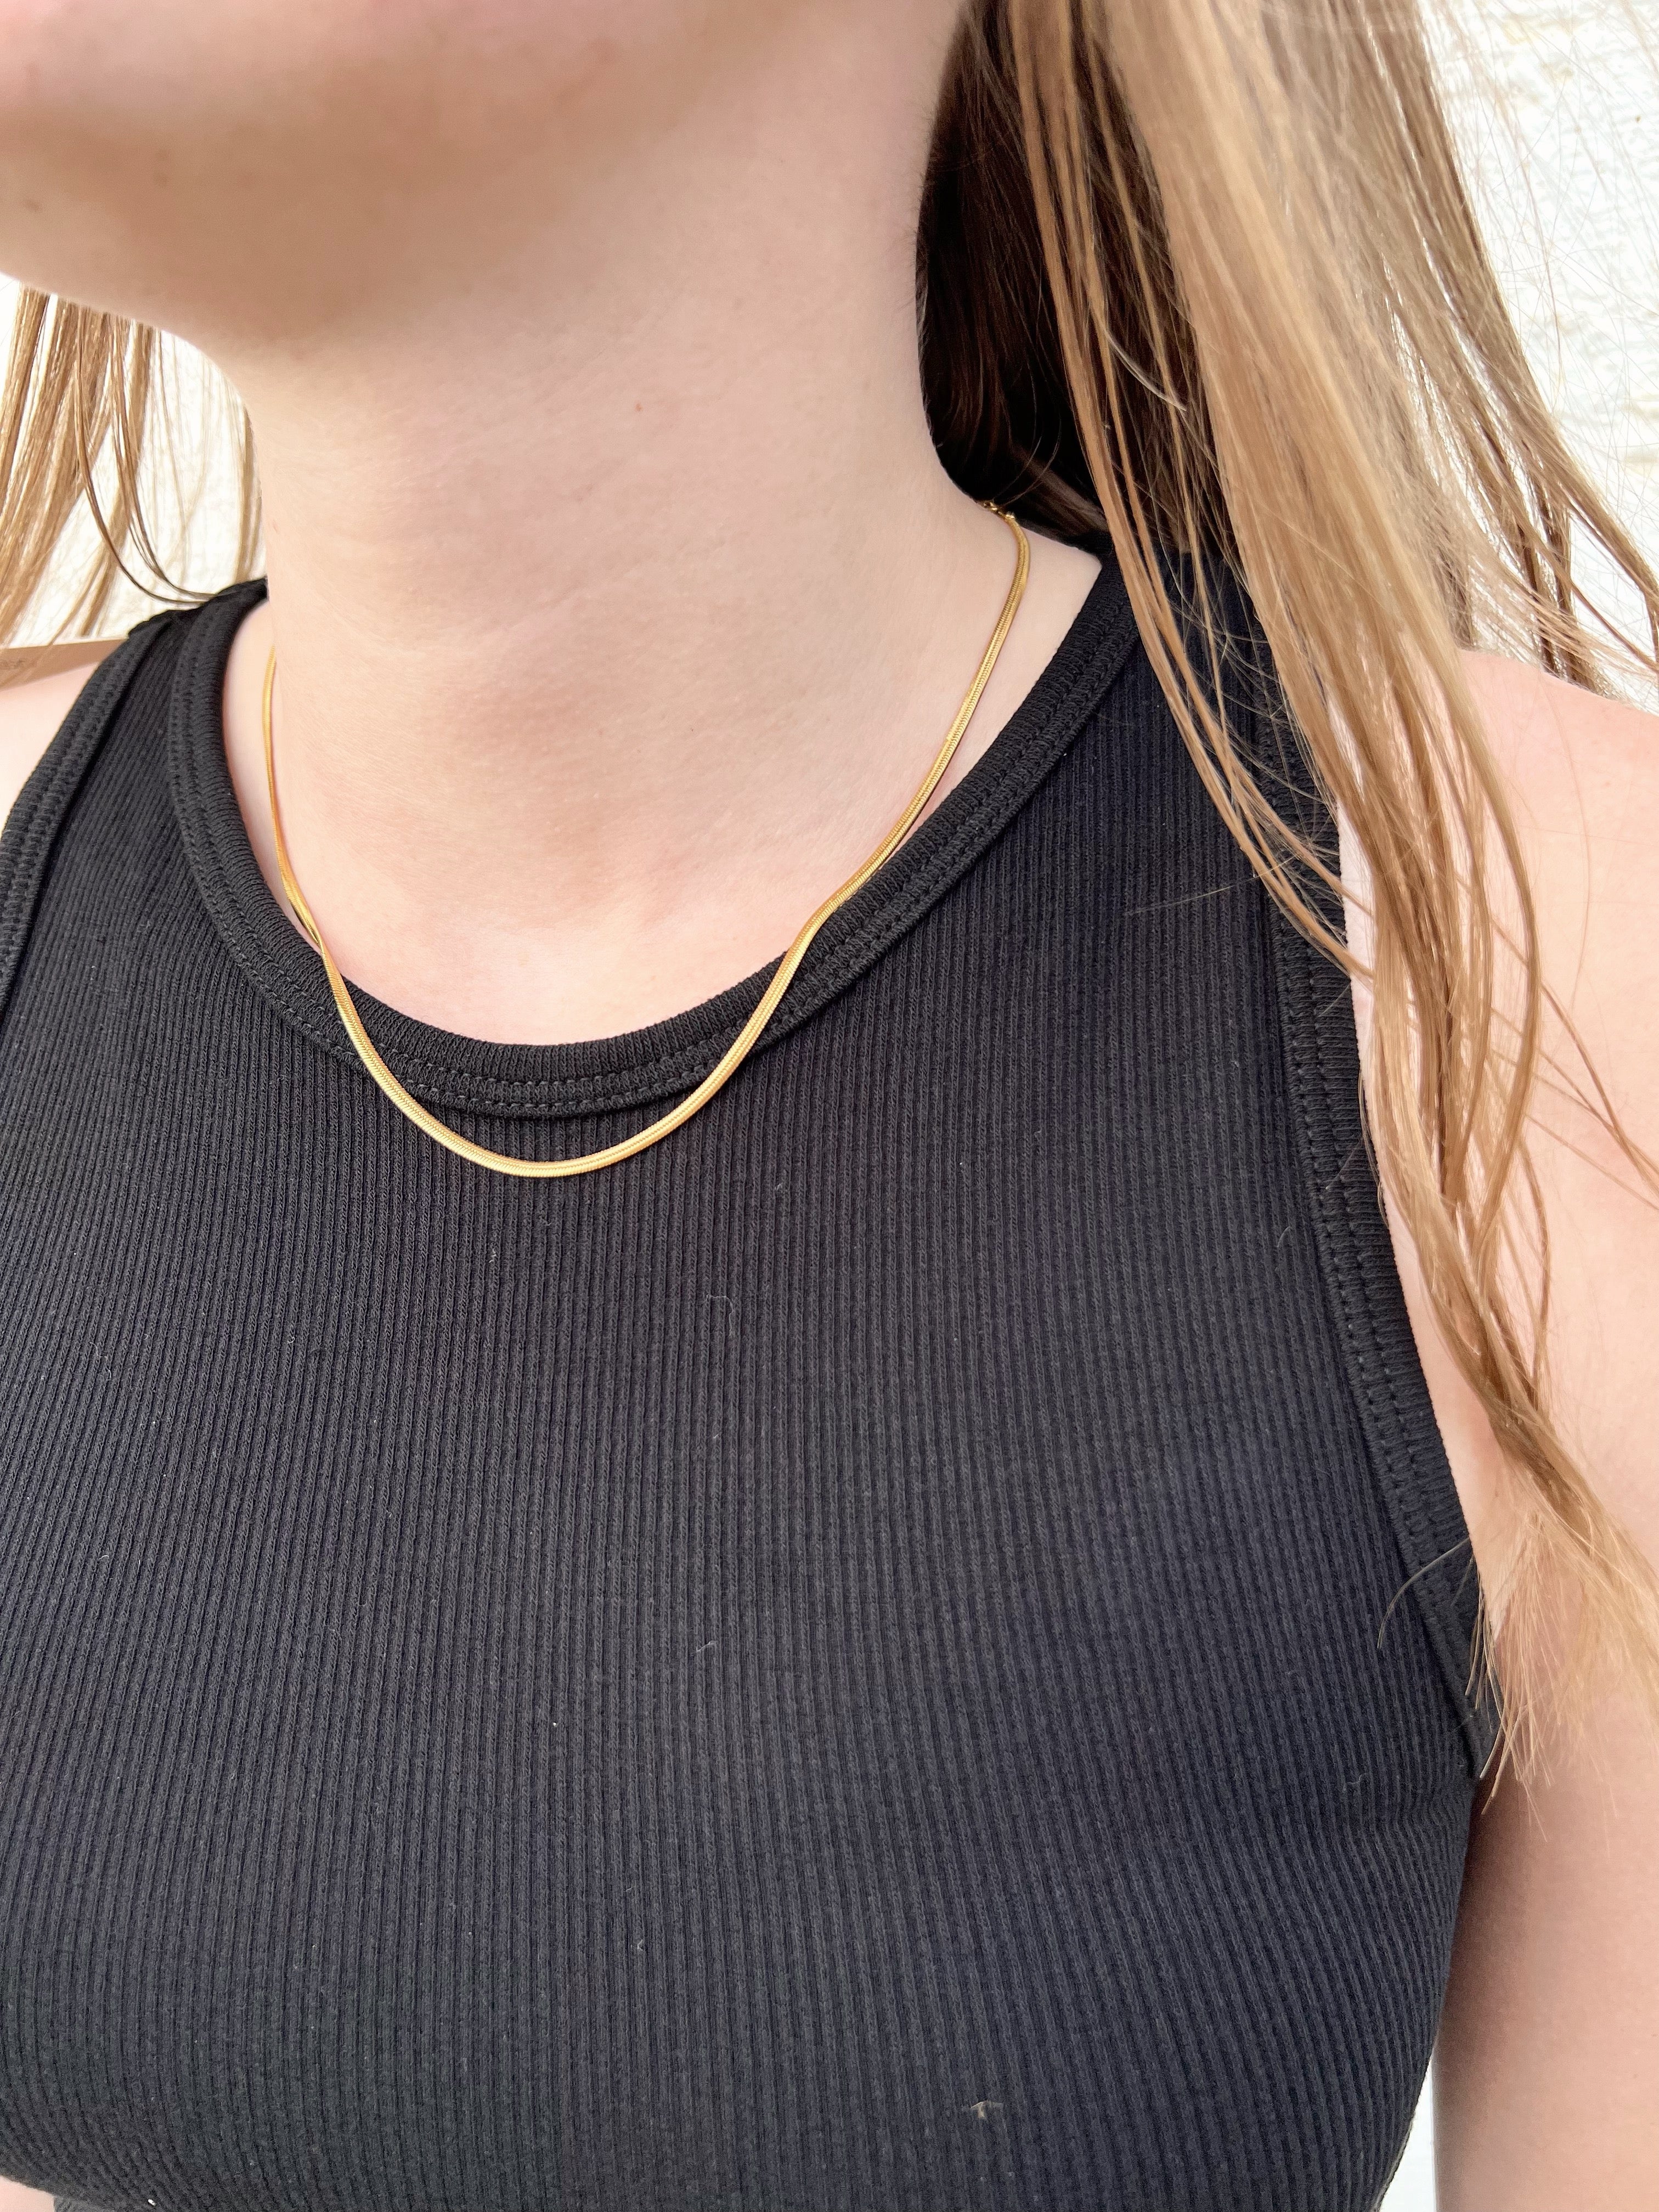 Namaste Jewelry Dunn Herringbone Necklace - Gold